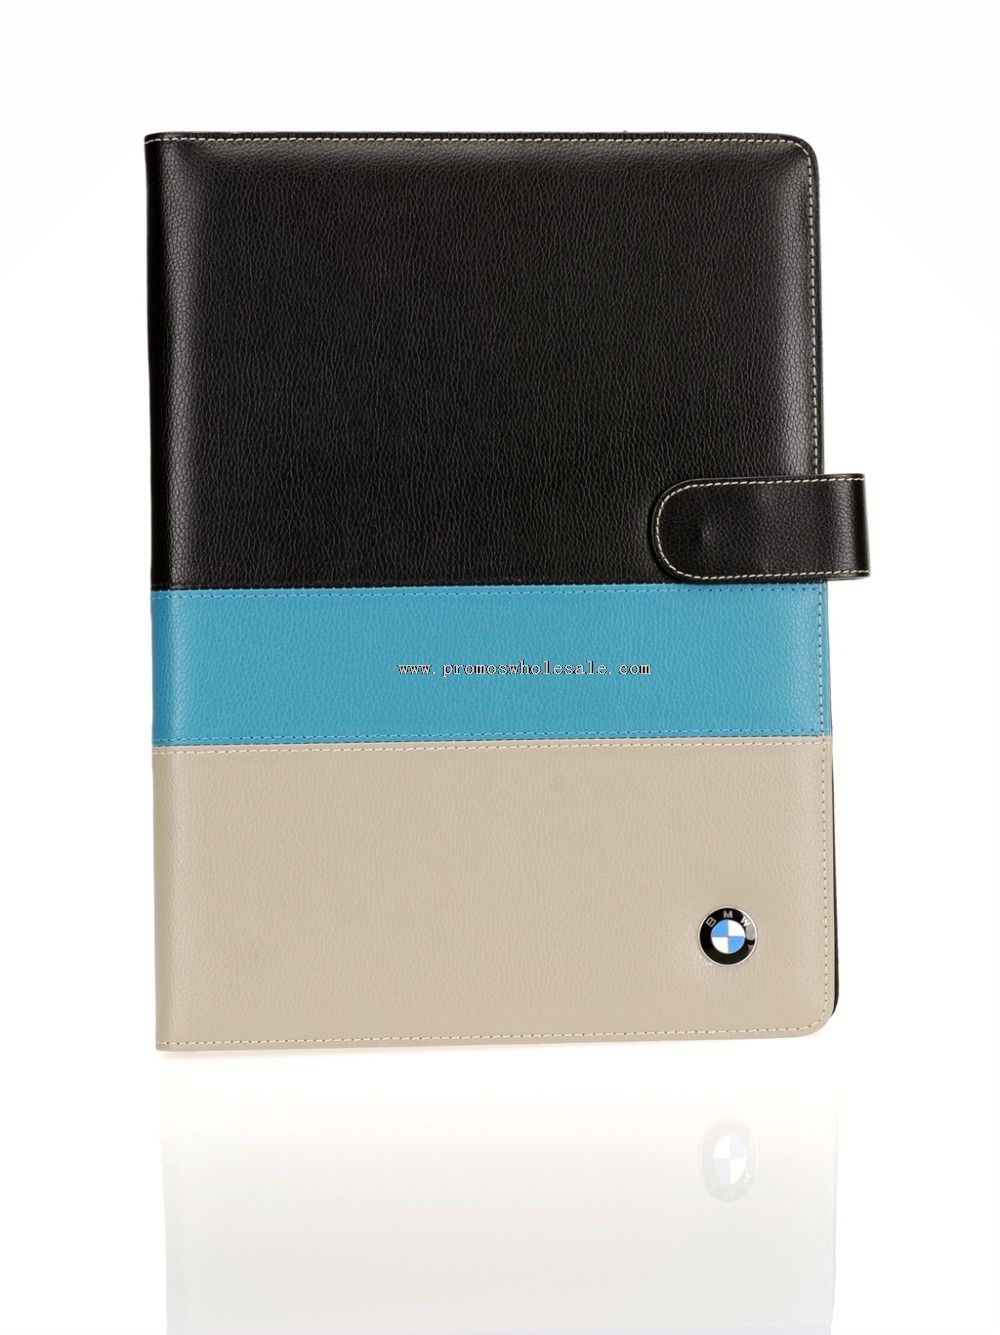 Leather portfolio folder tablet case with notepad